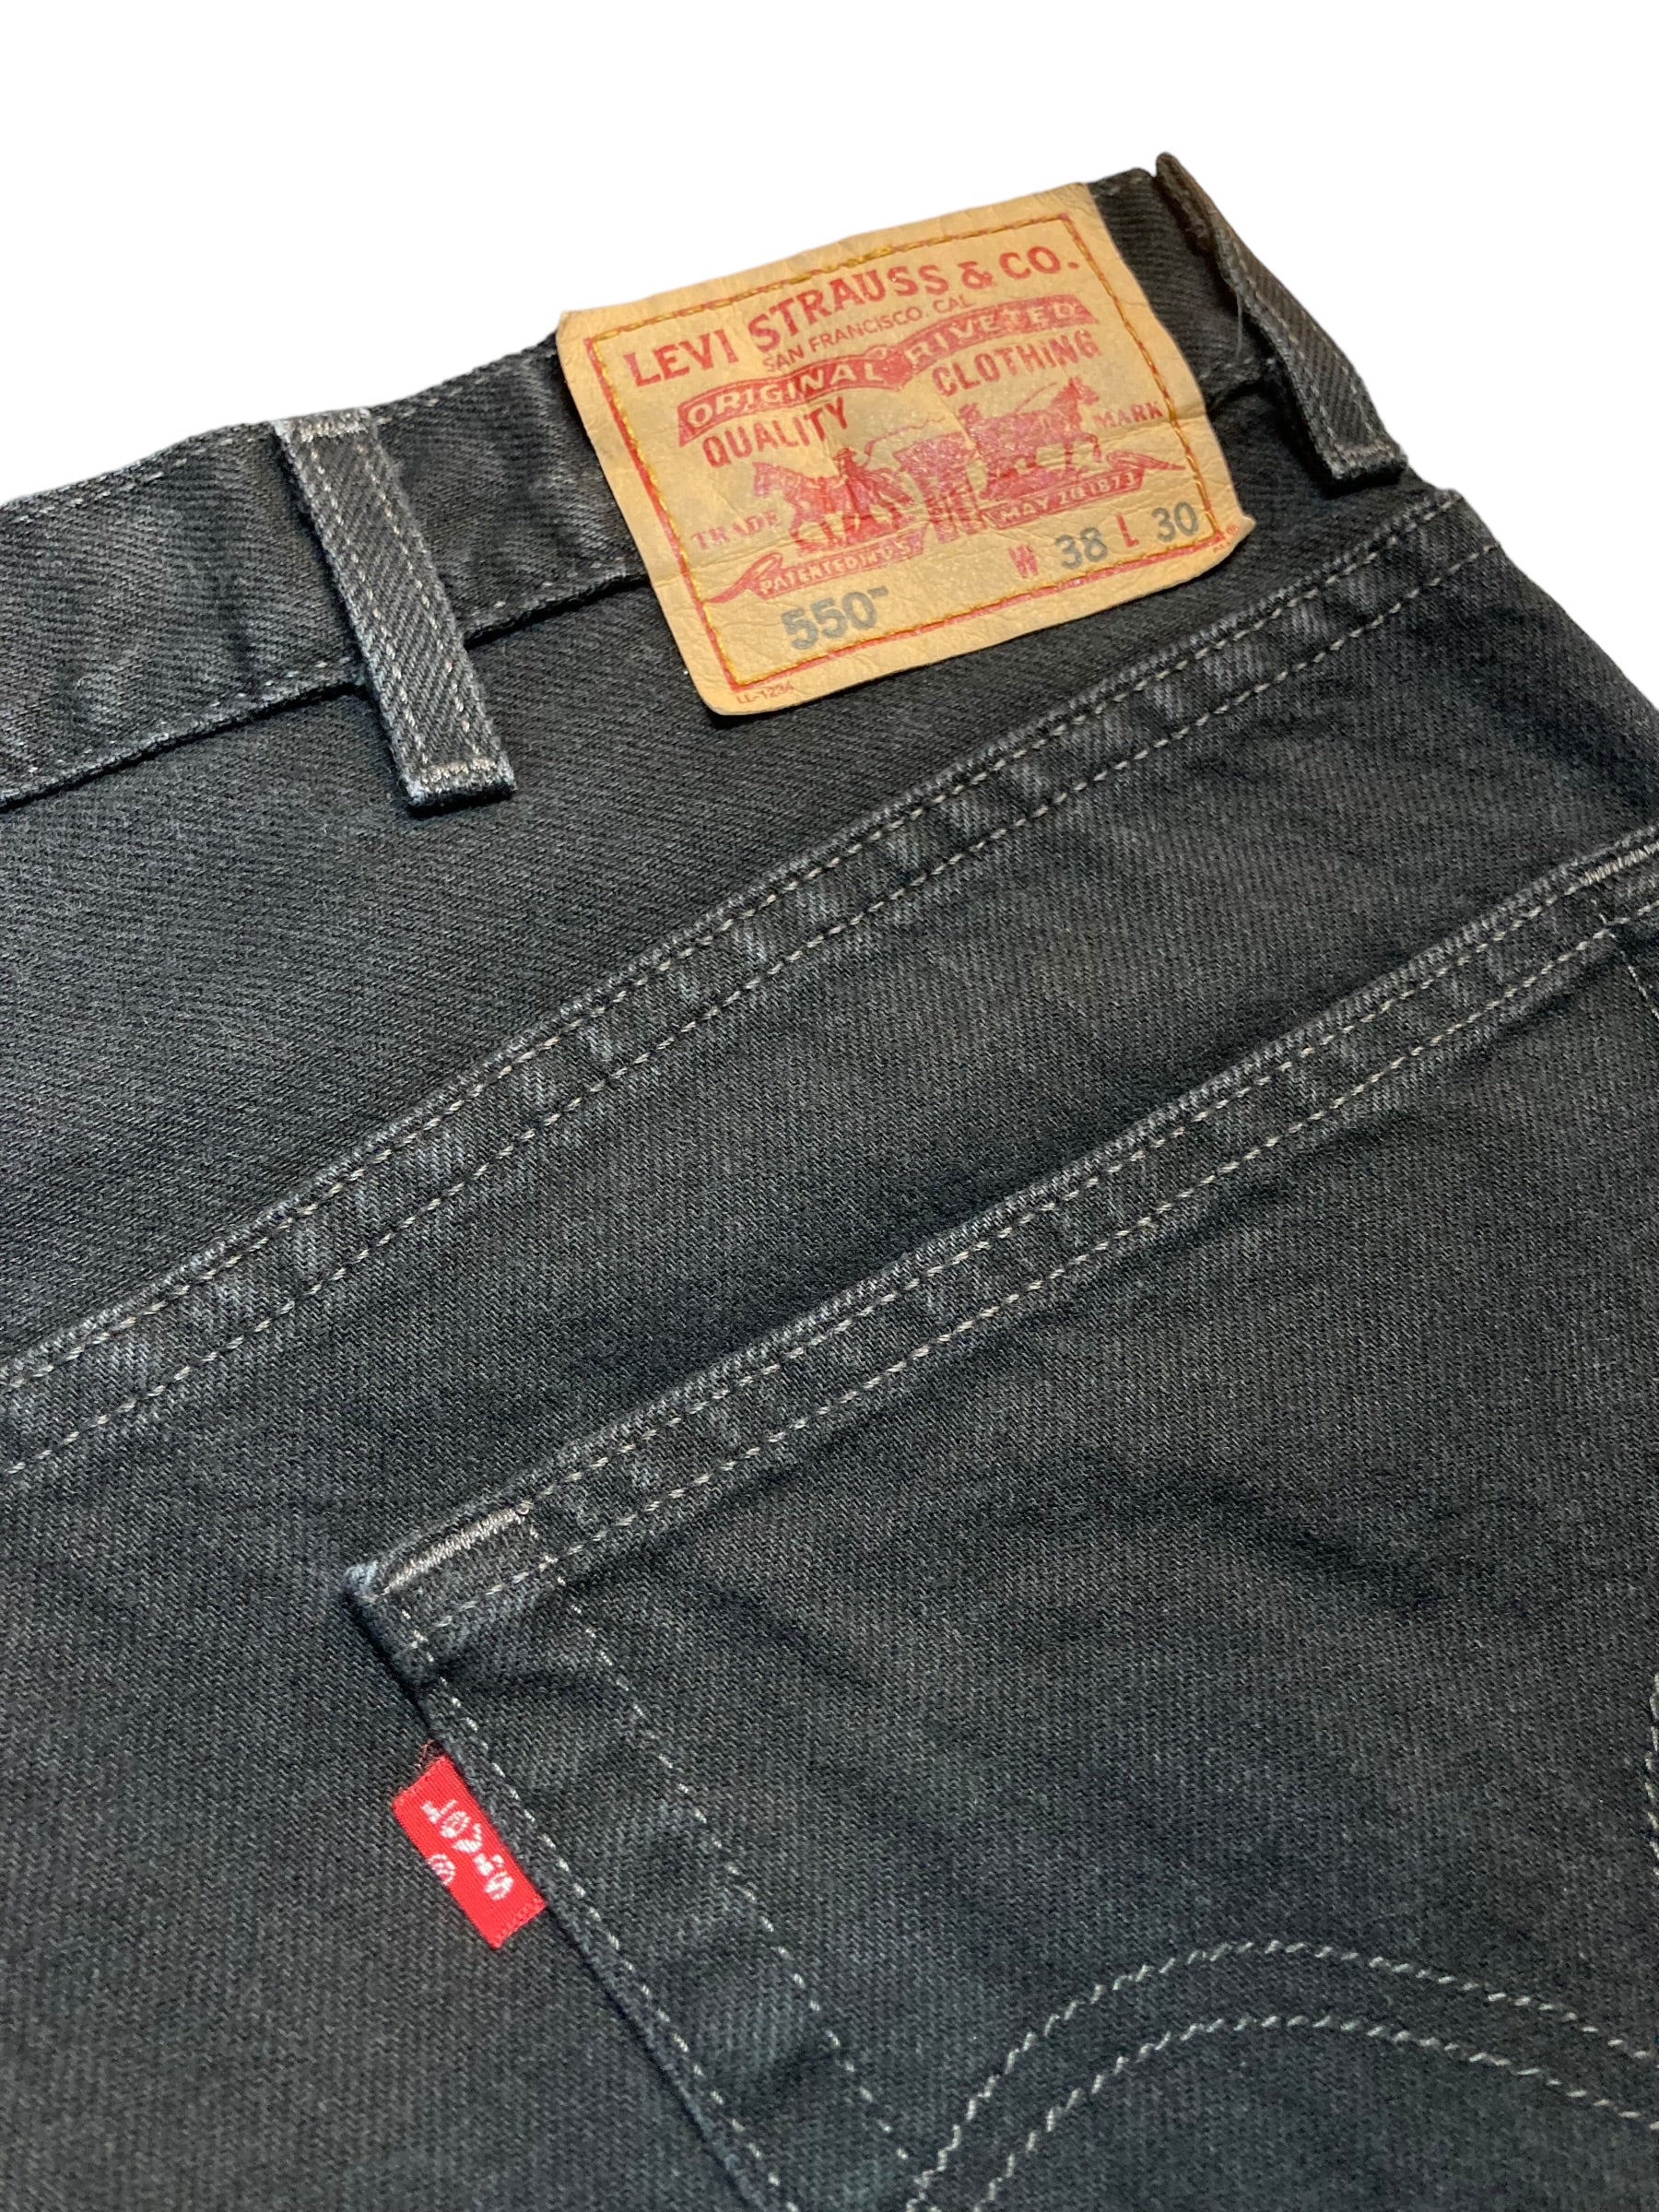 FLEXHOOD Destroy Micro Rag Jeans XLサイズBABY•G - パンツ